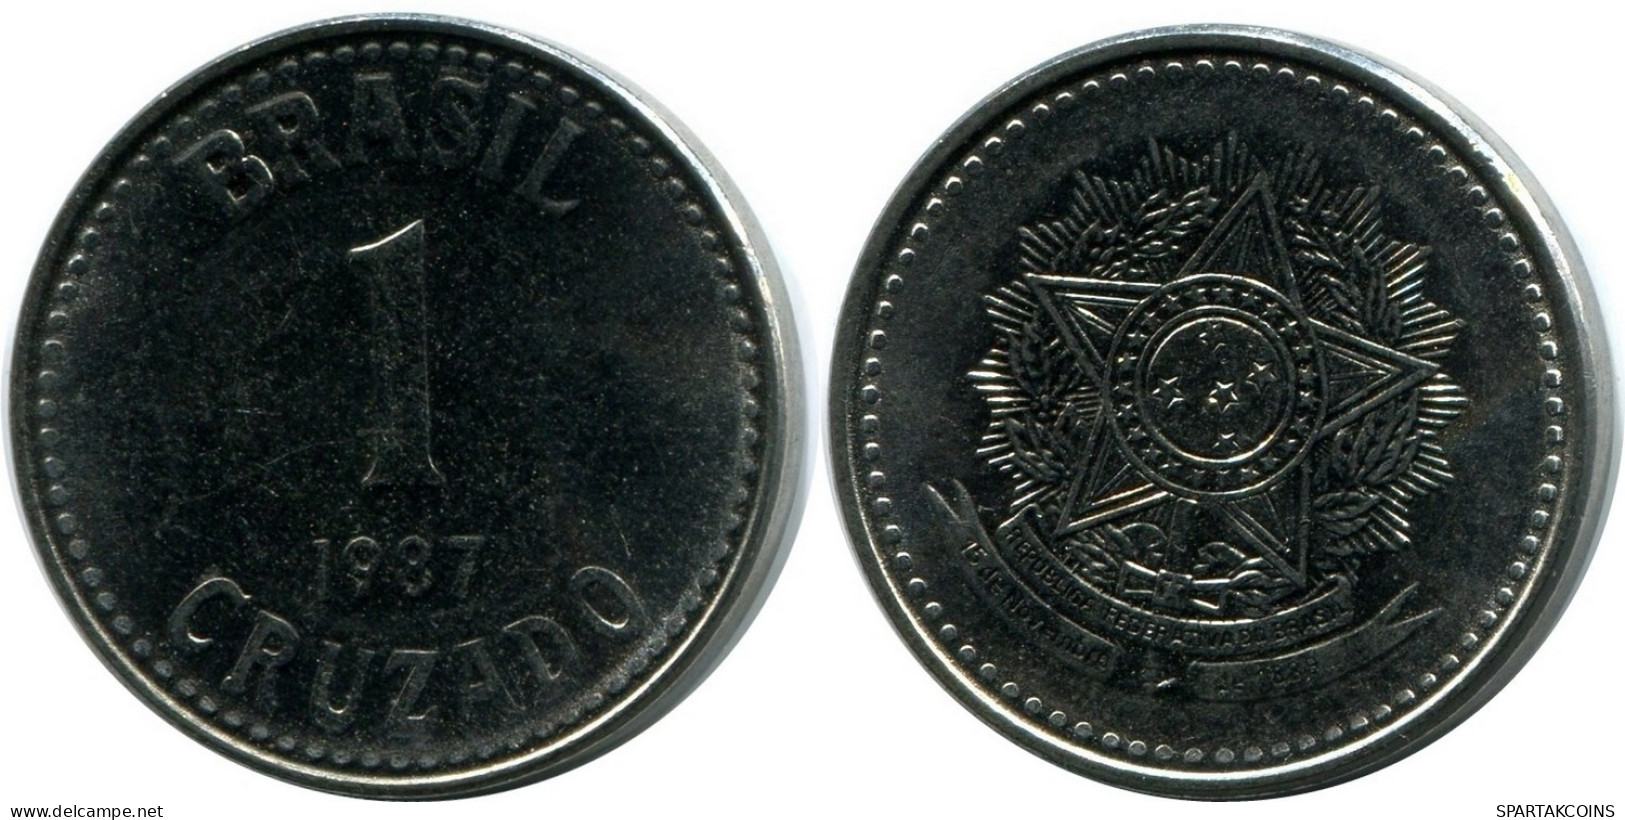 1 CRUZADO 1987 BBASIL BRAZIL Moneda UNC #M10275.E.A - Brasil